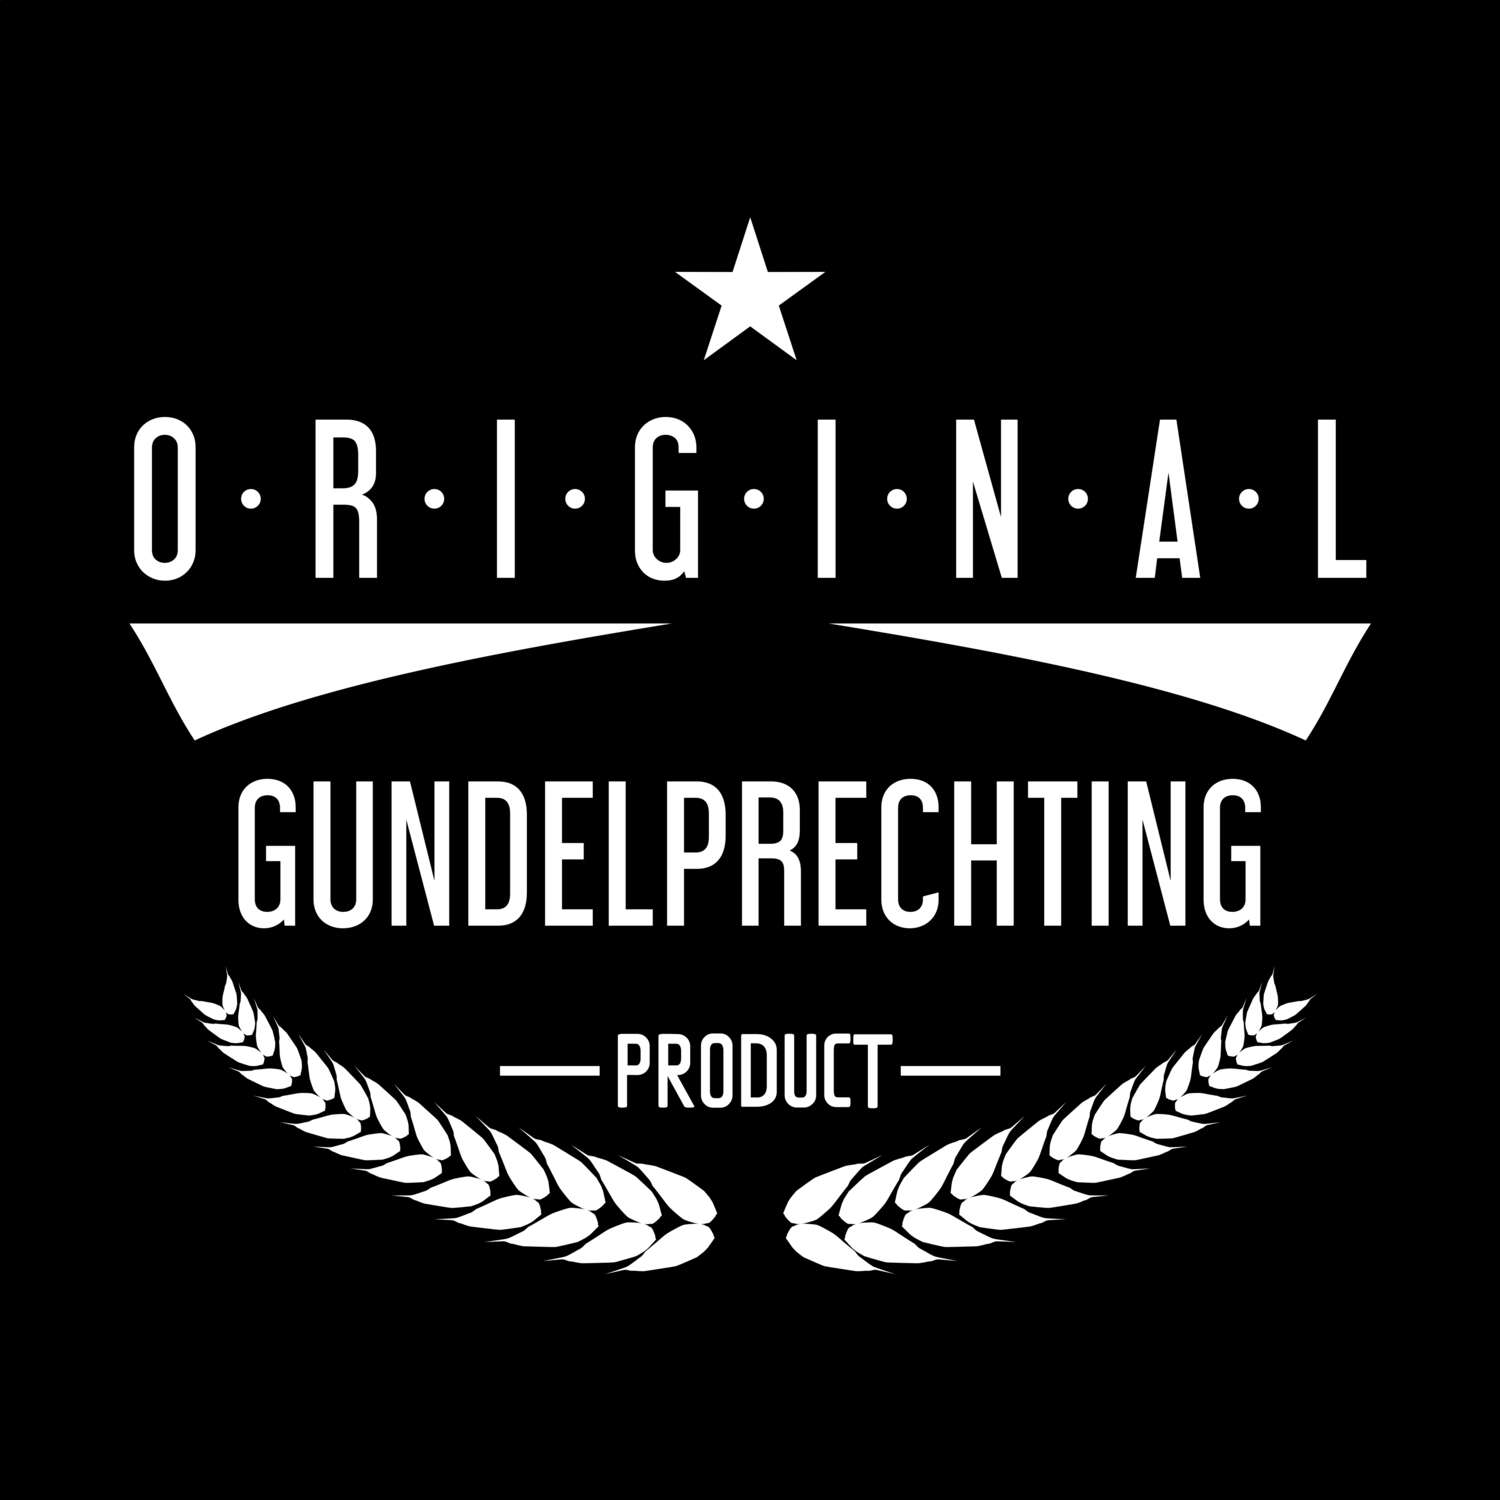 Gundelprechting T-Shirt »Original Product«